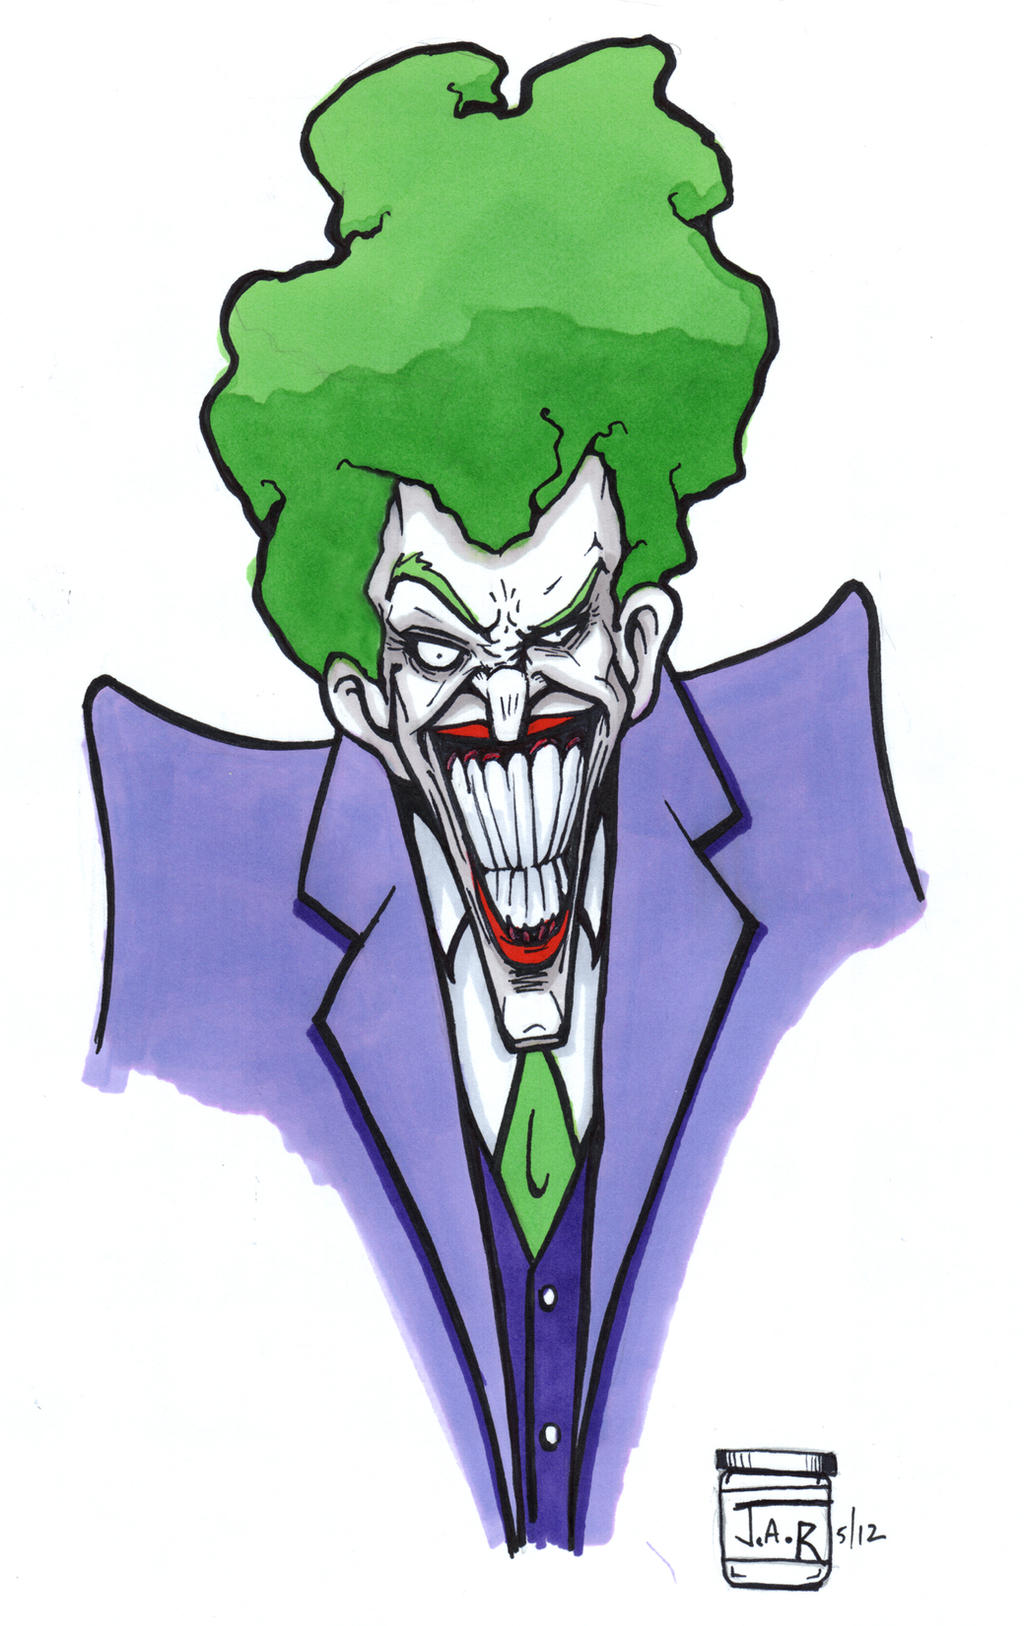 The Joker by JarOfComics on DeviantArt